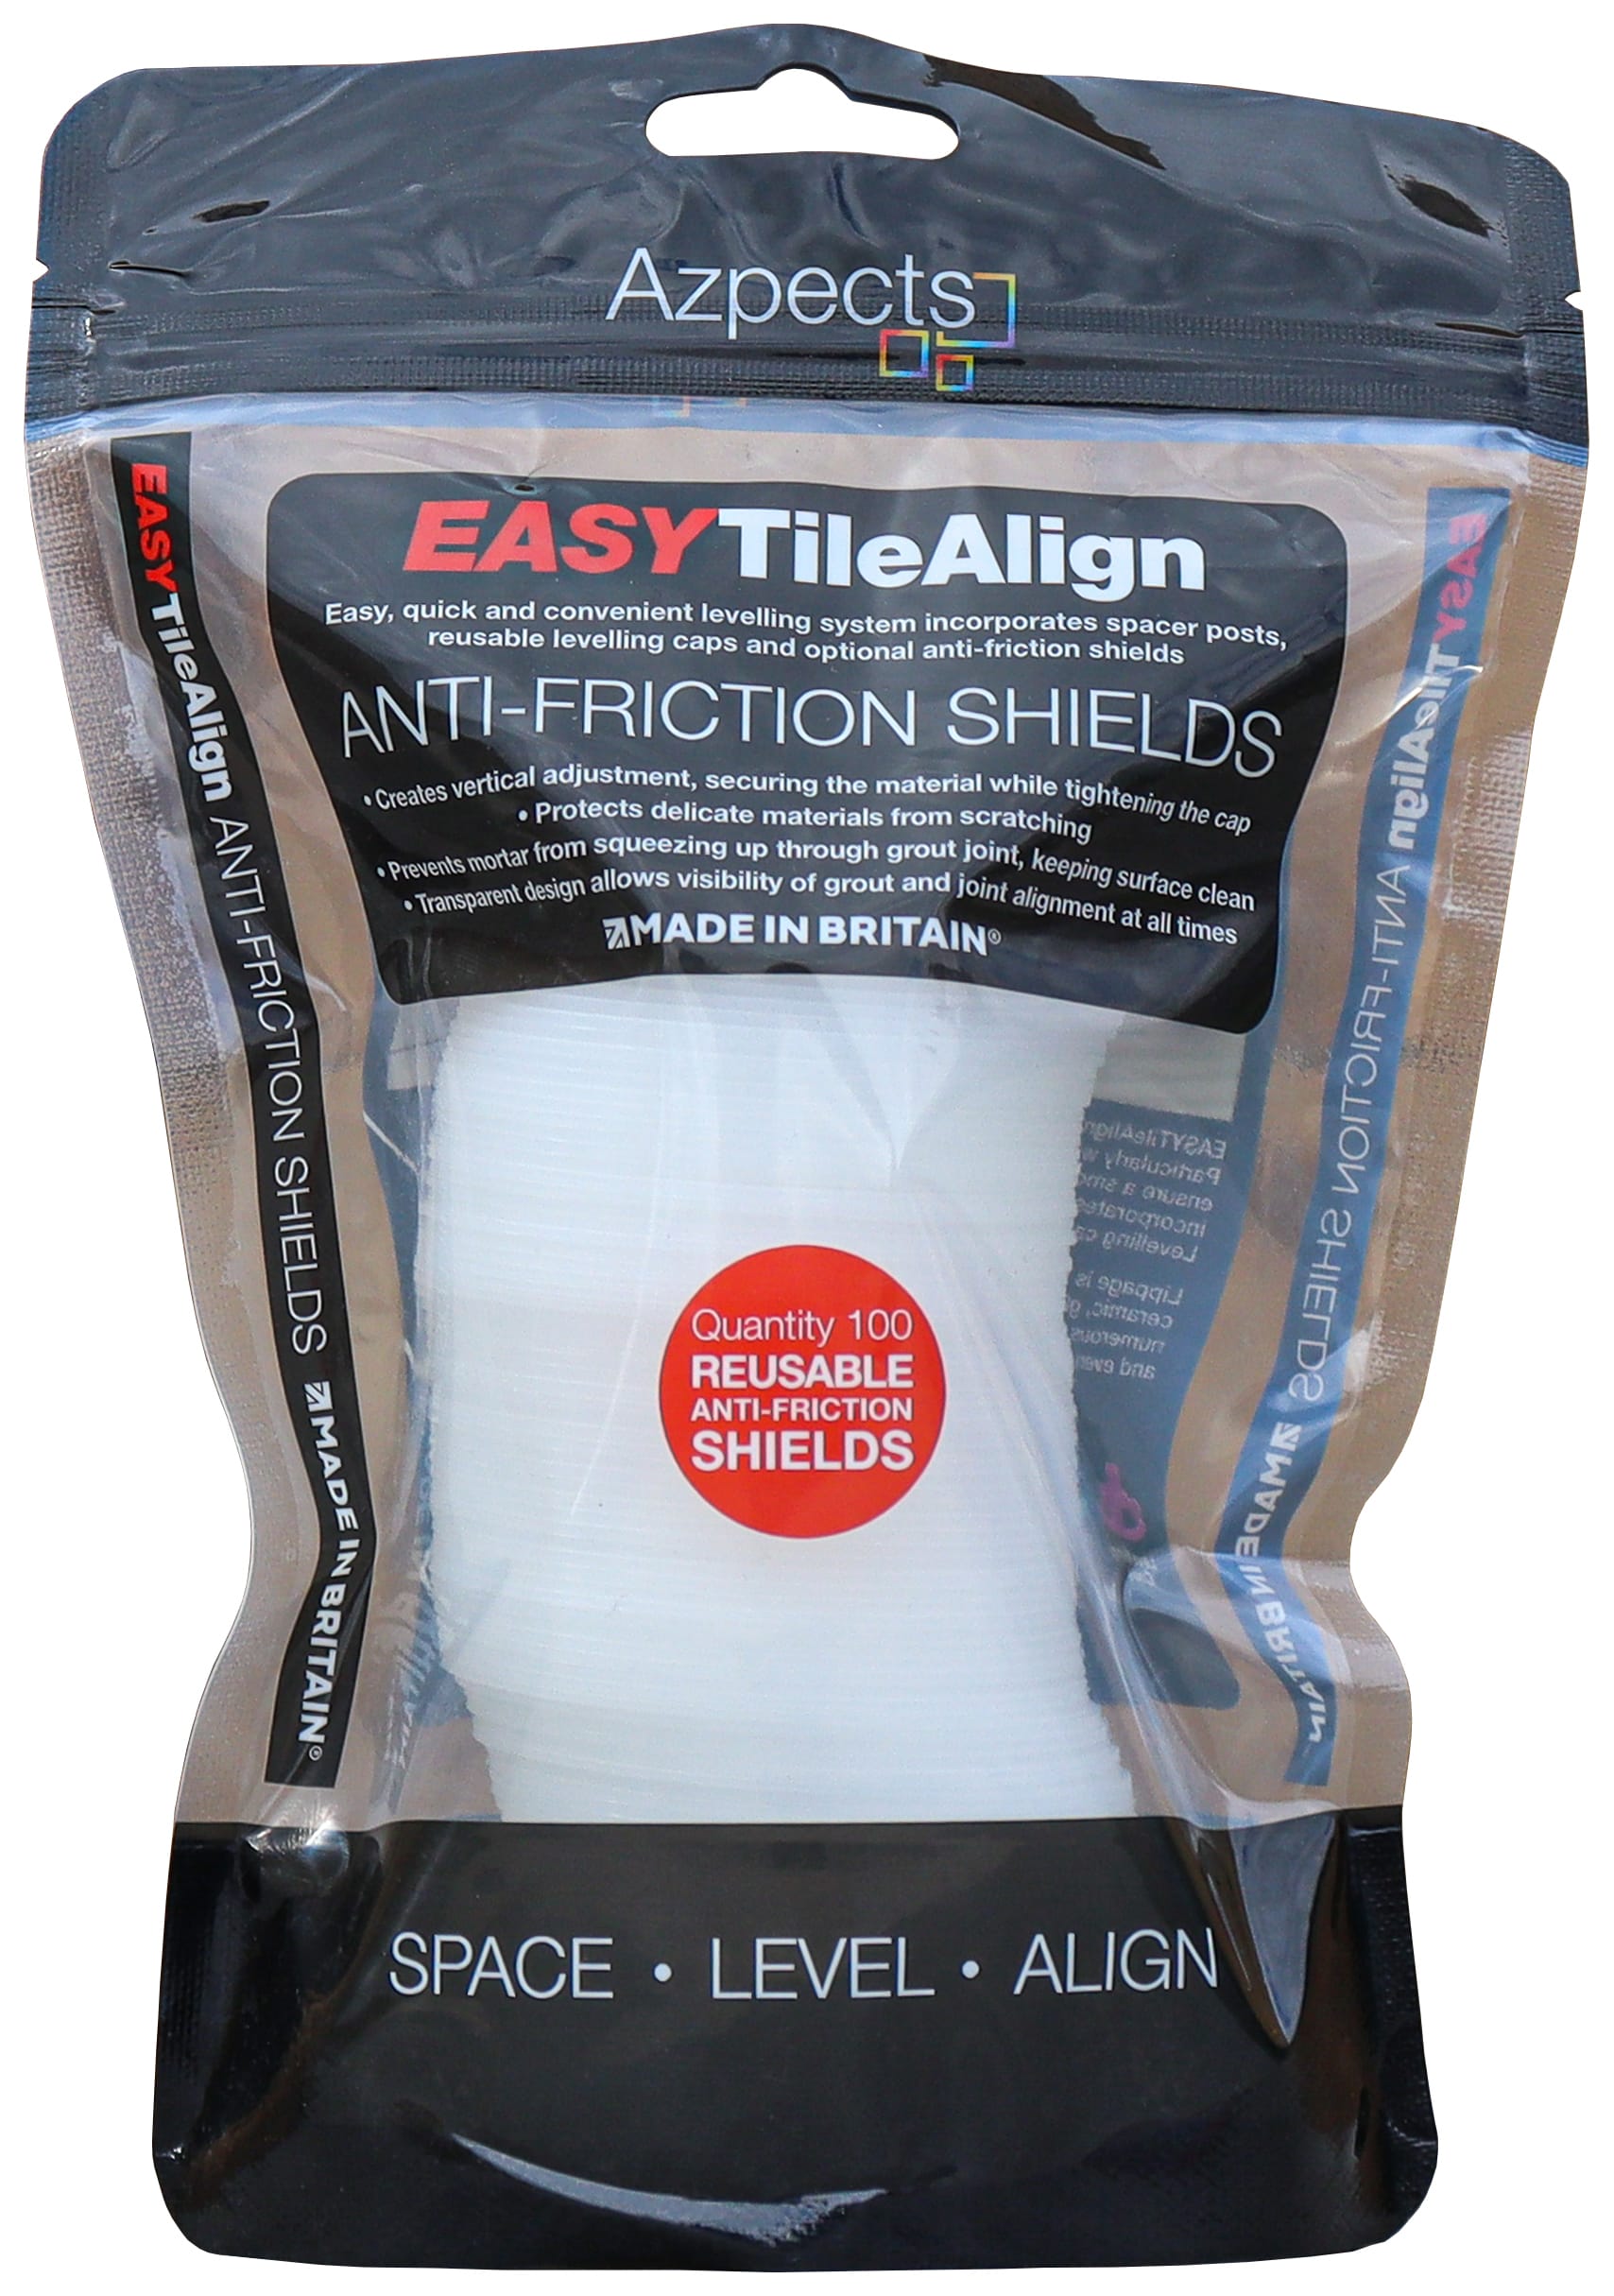 Easy Tile Align Anti-Friction Shields - Pack of